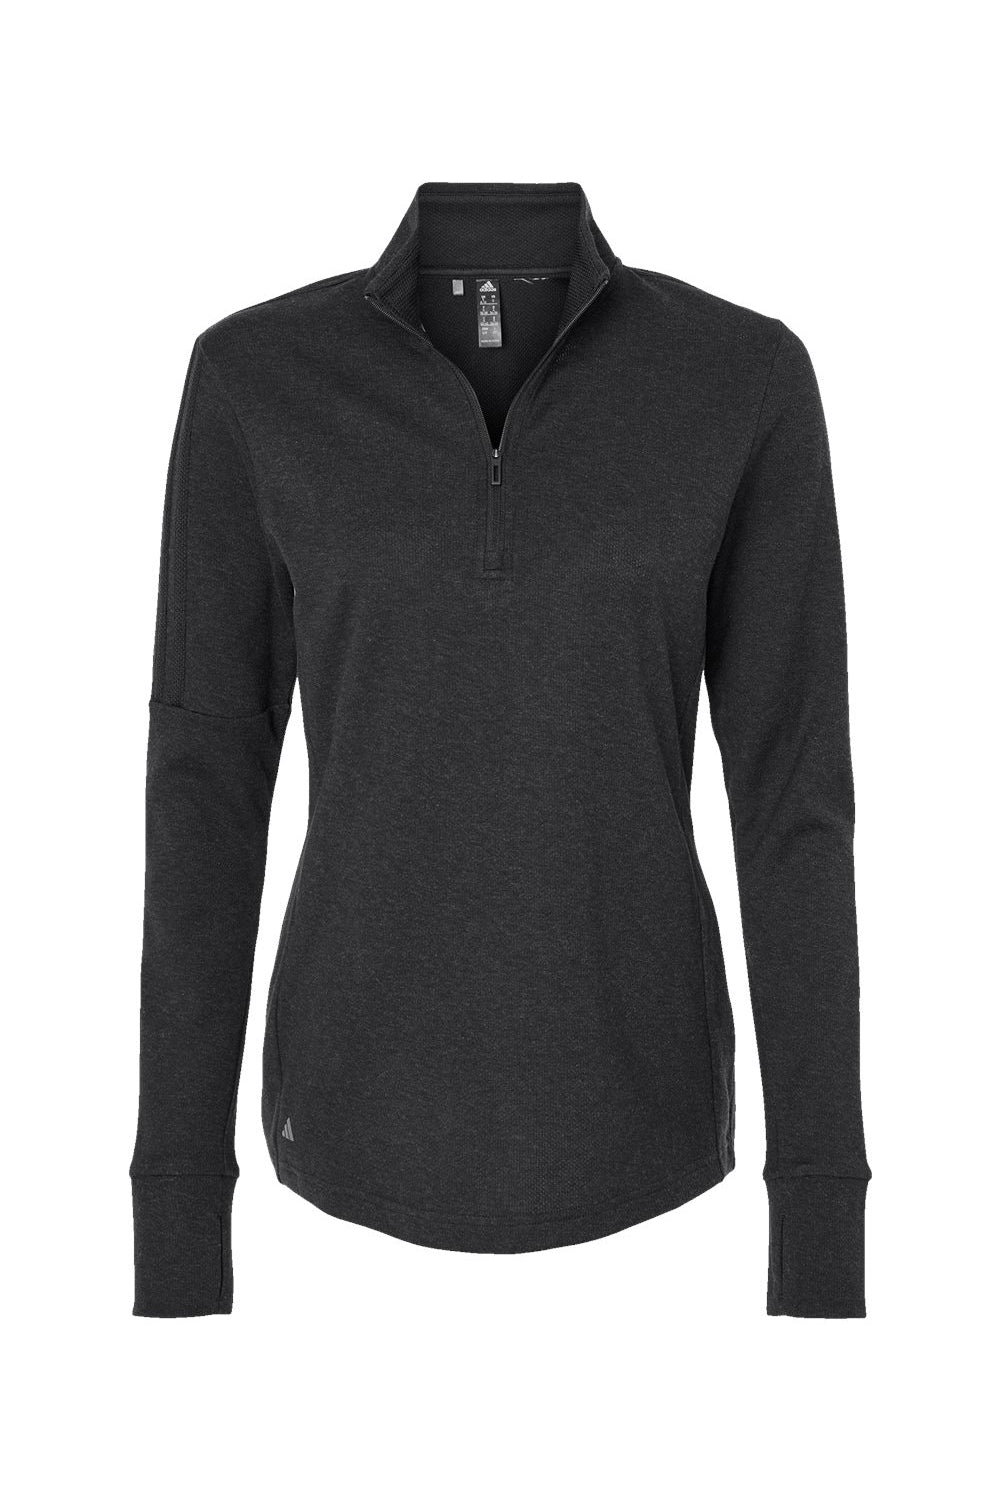 Adidas A555 Womens 3 Stripes Moisture Wicking 1/4 Zip Sweater Black Melange Flat Front